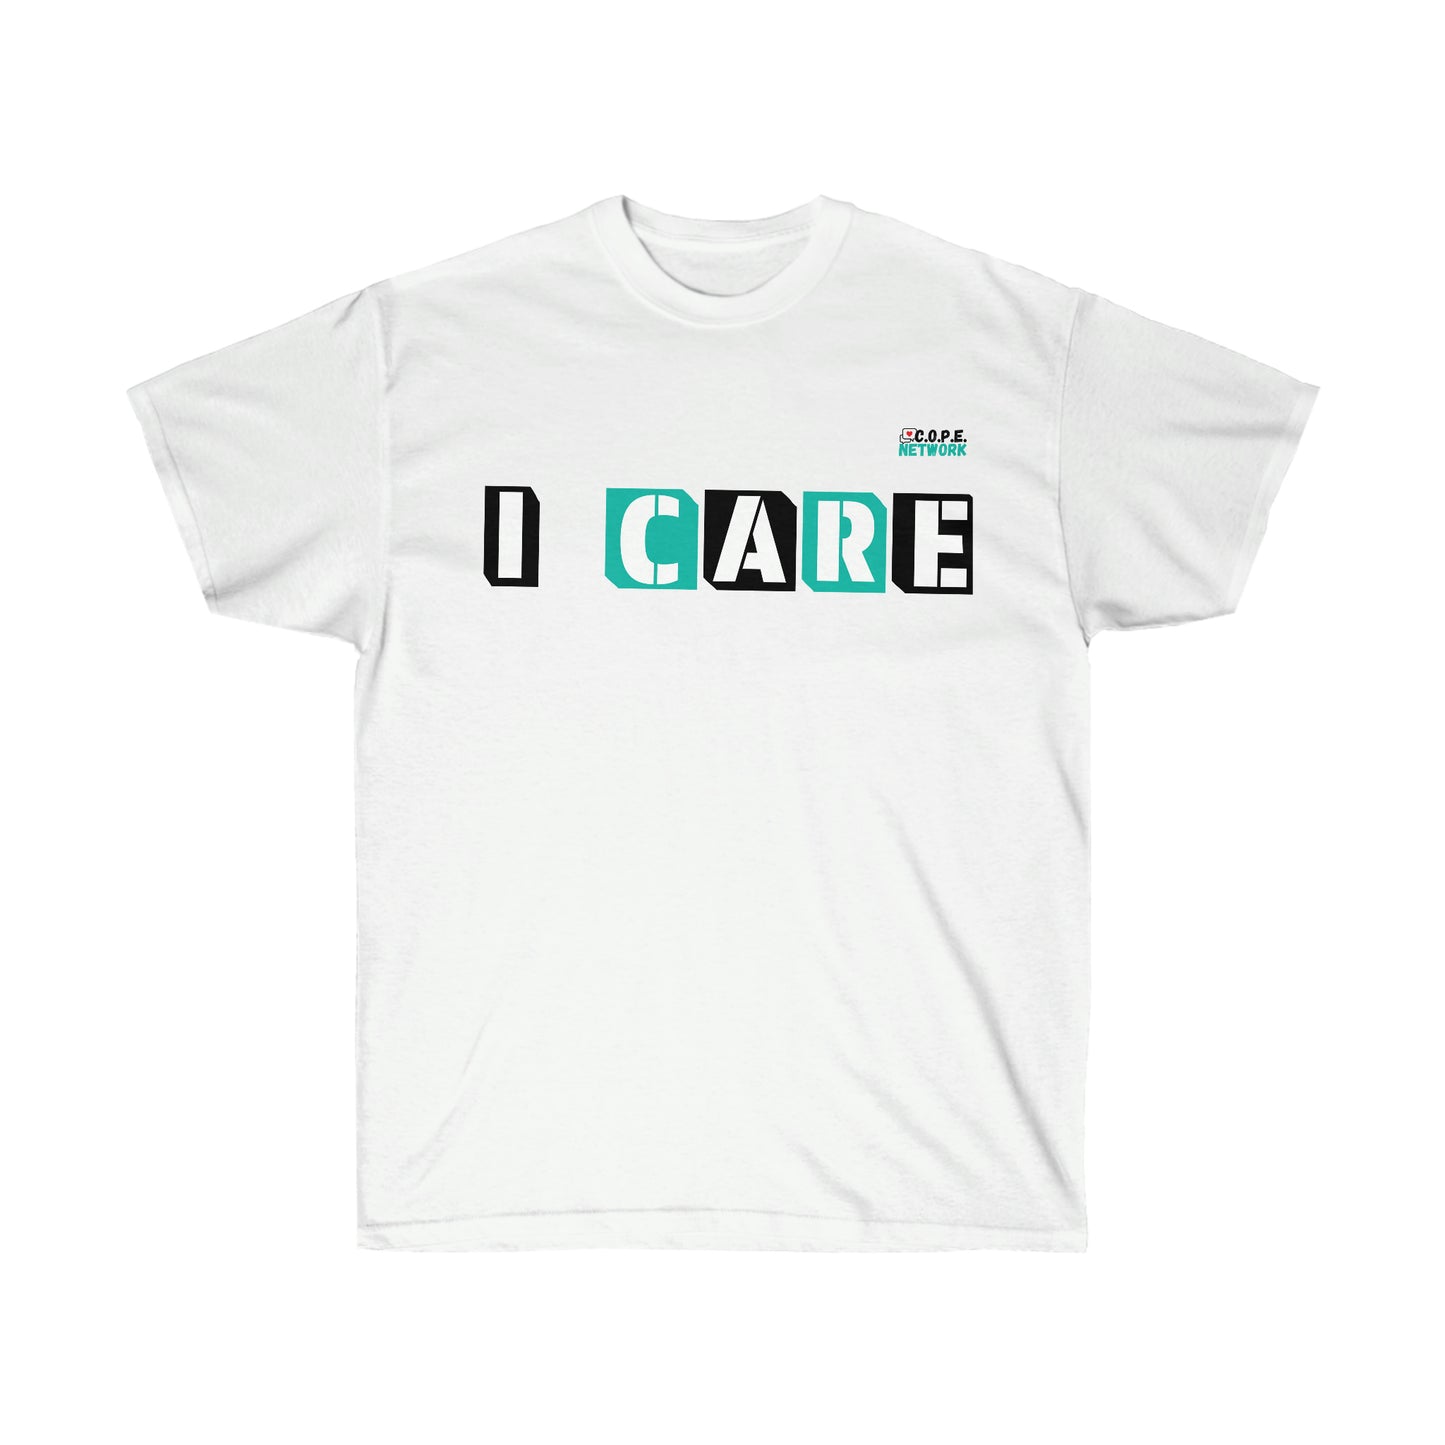 I care white T shirt